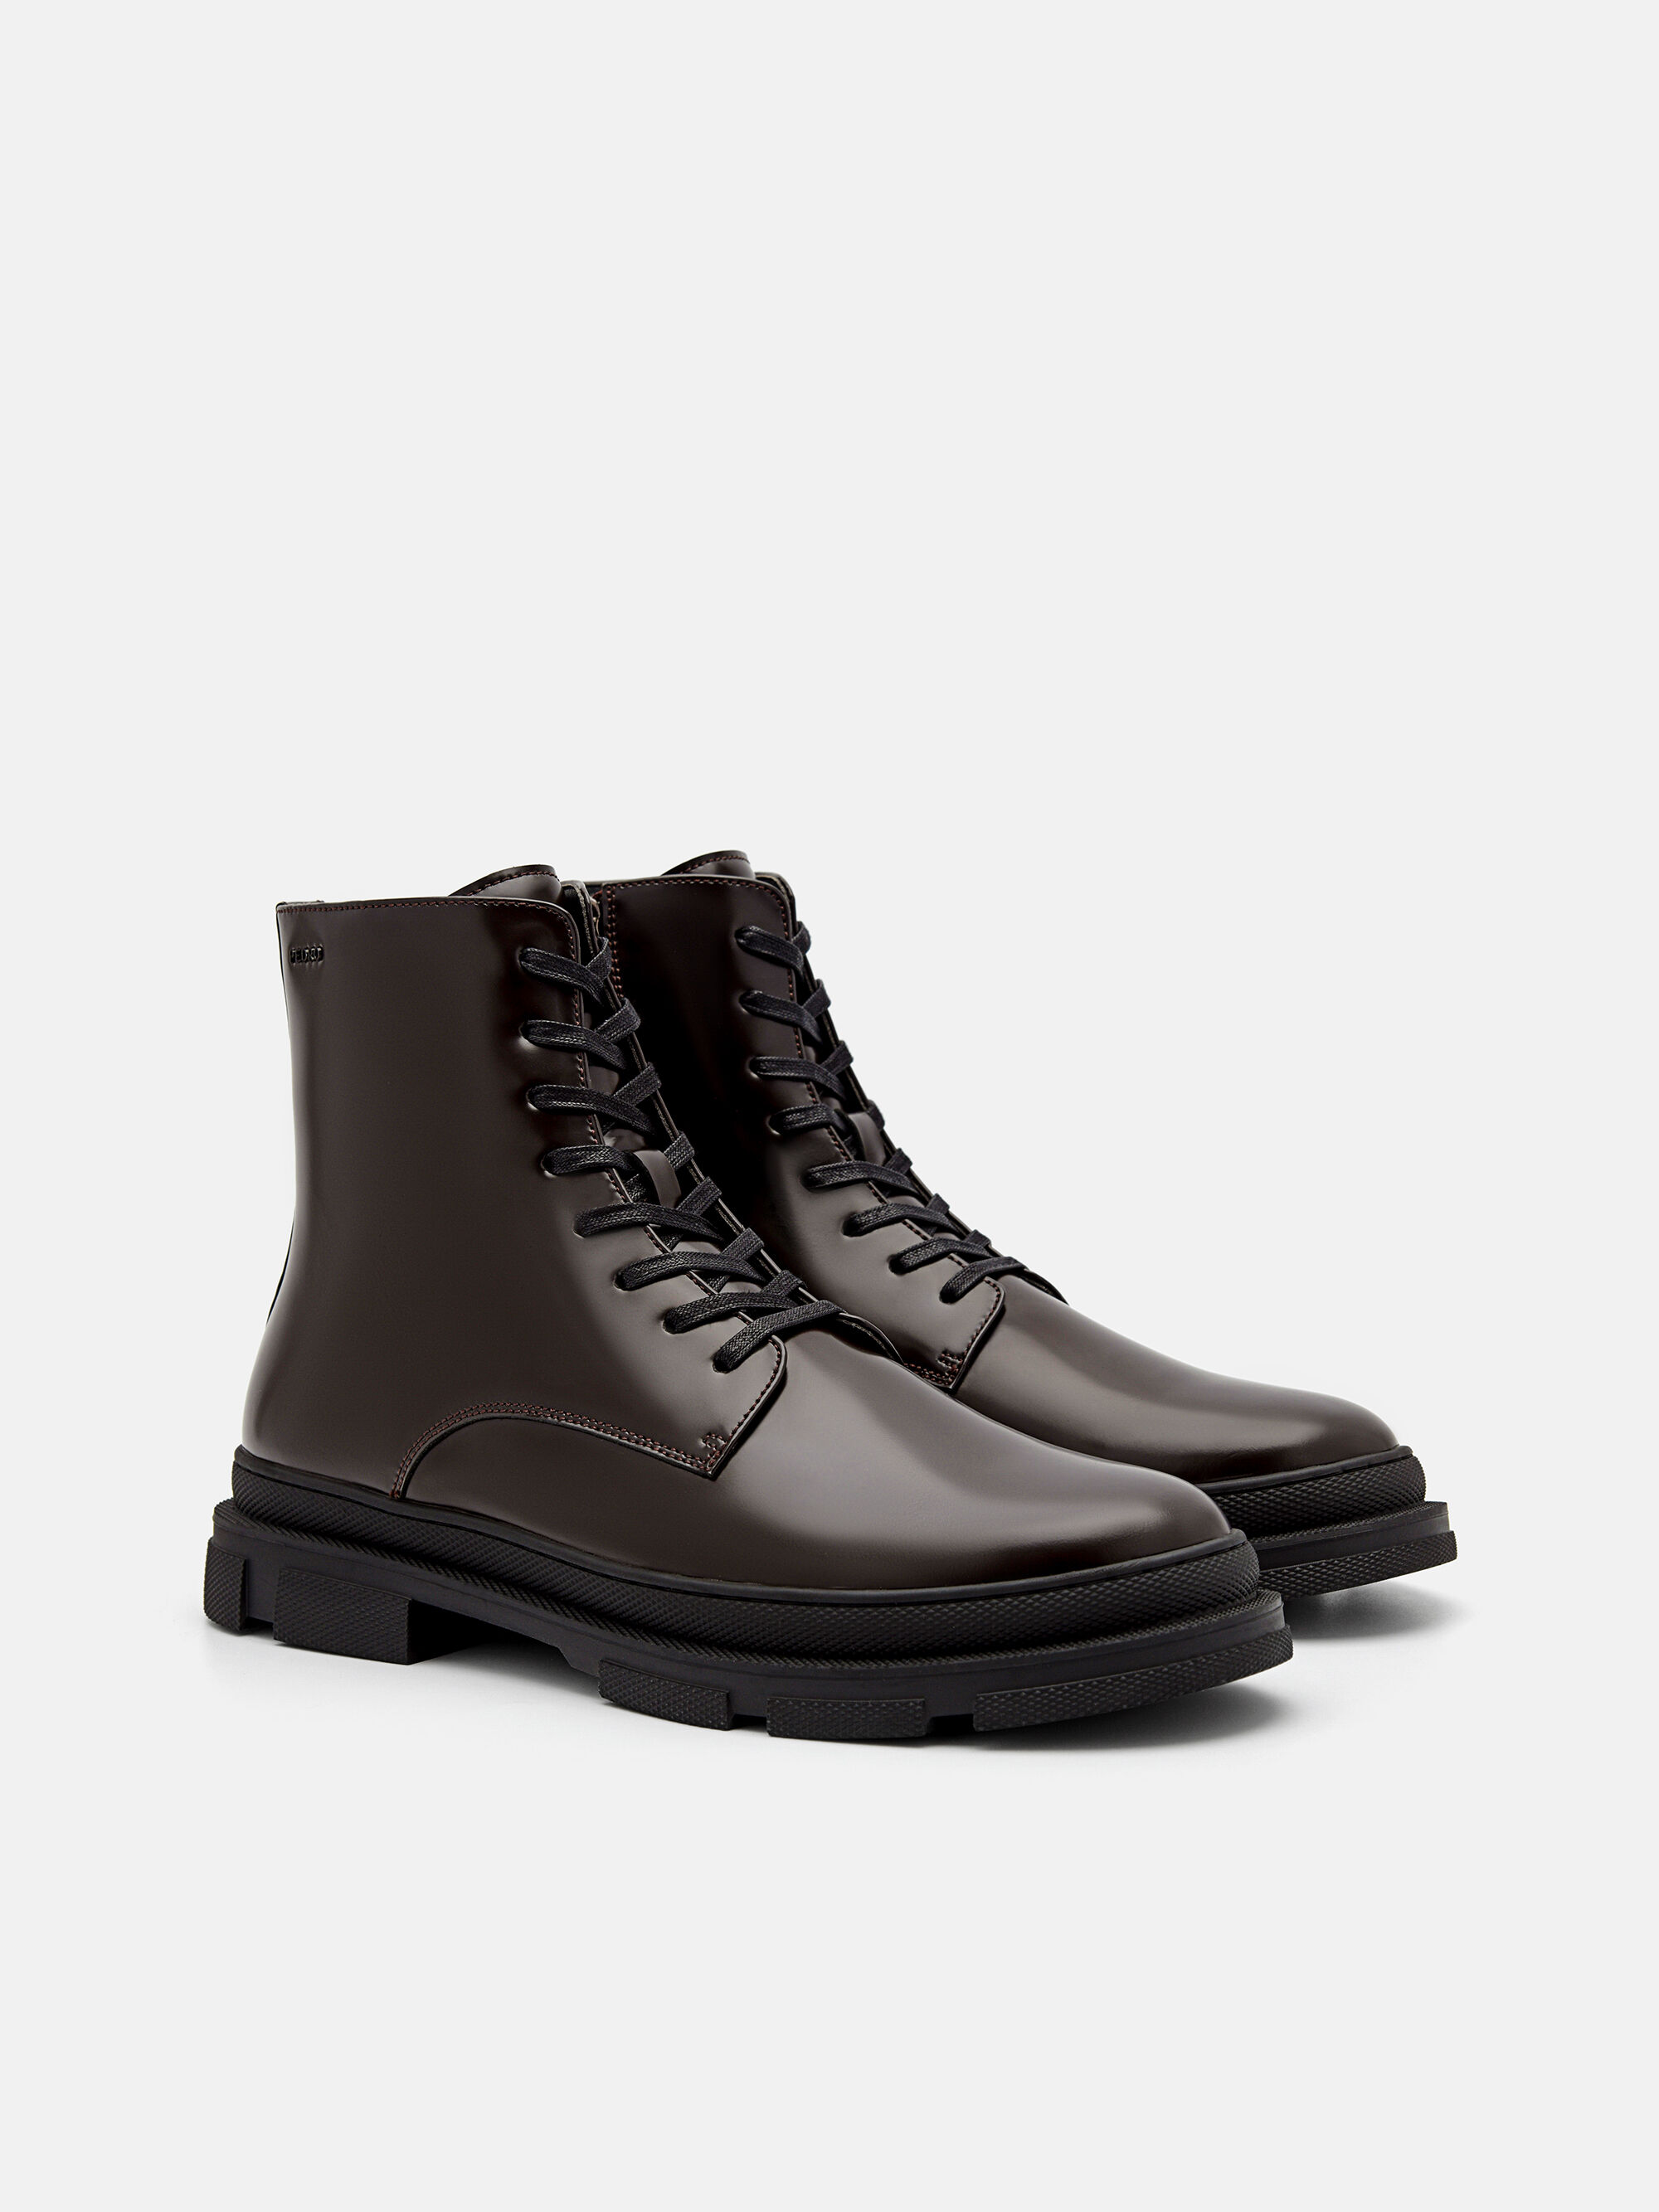 Men's Boots | PEDRO International